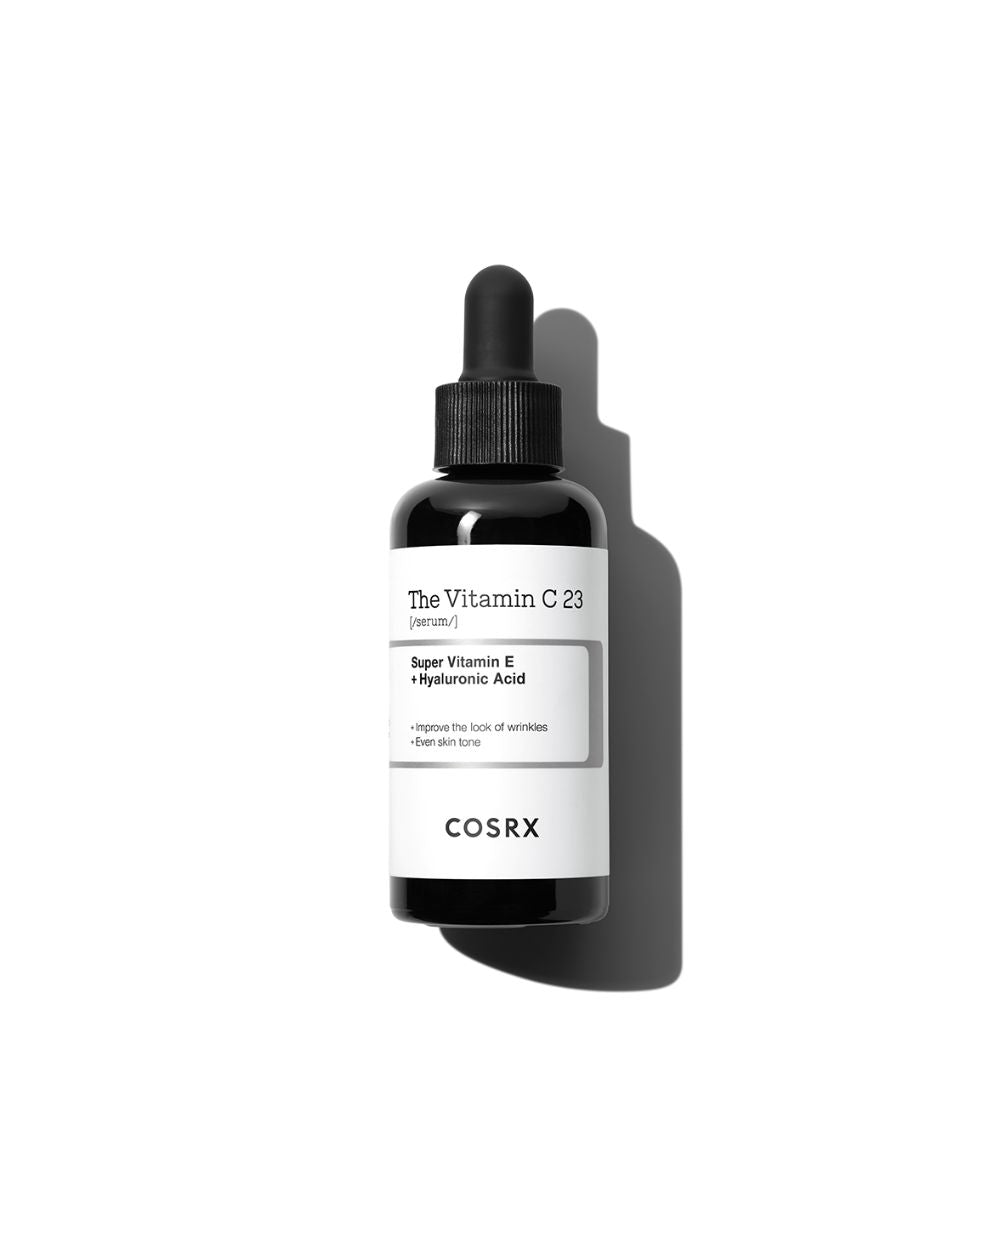 THE Vitamin C23 COSRX